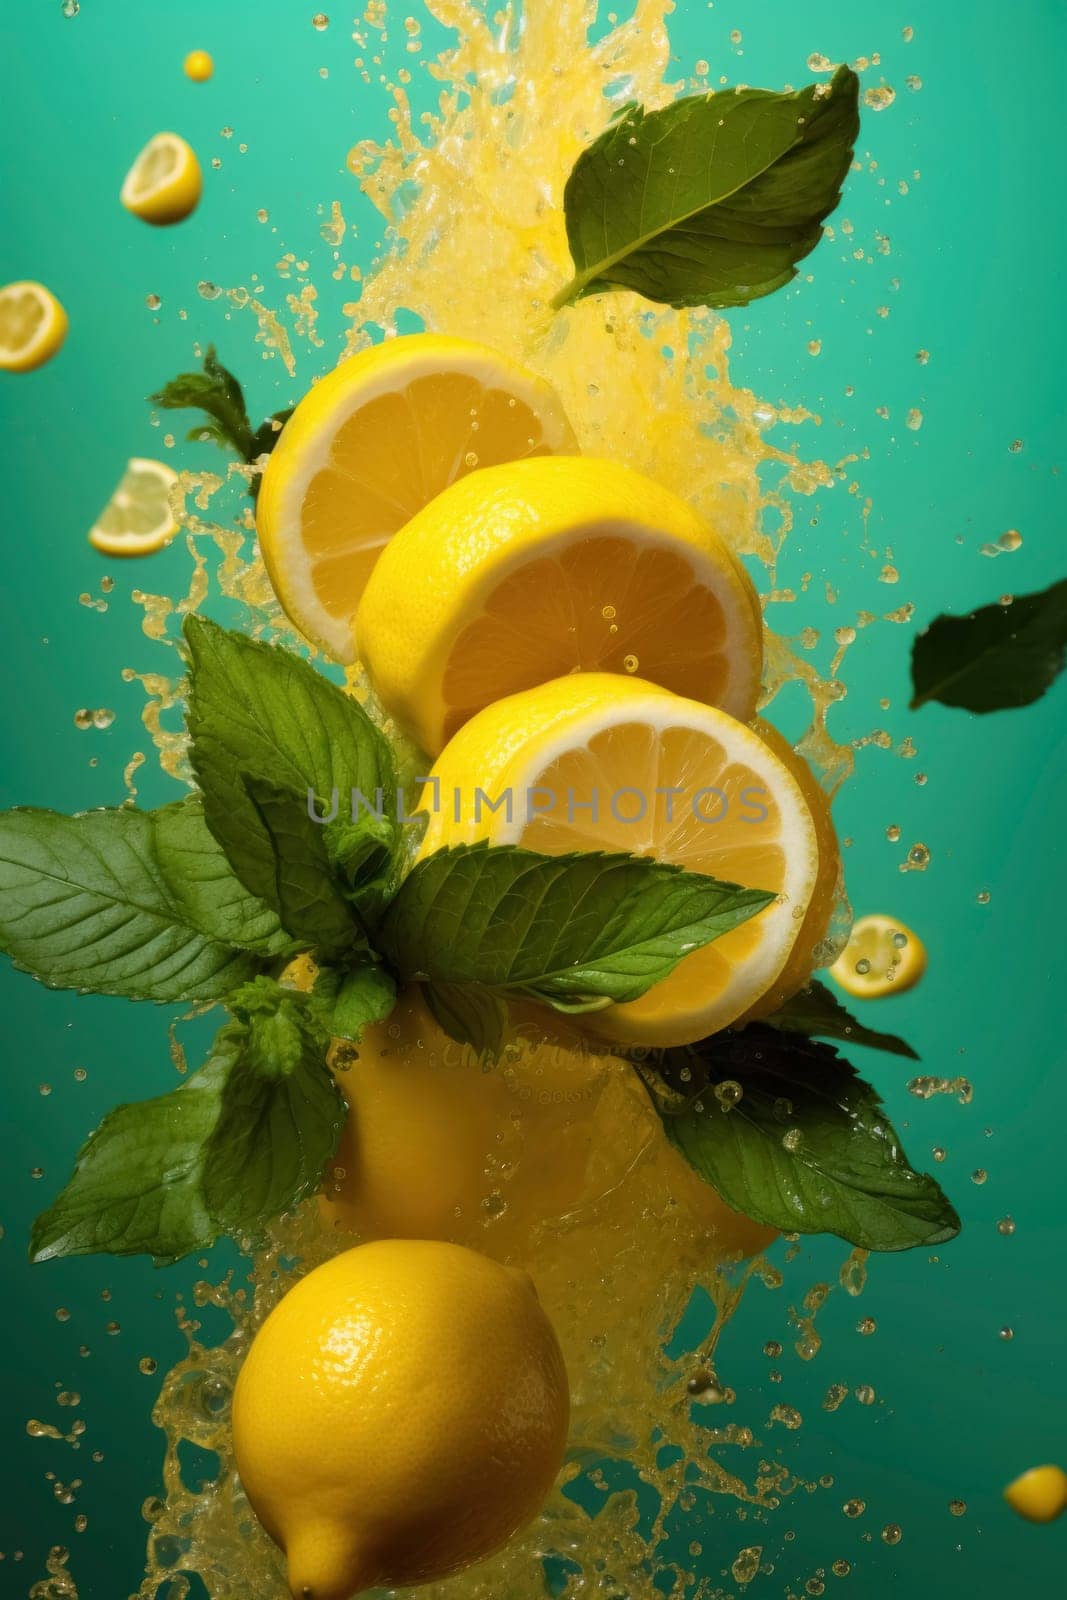 Vibrant citrus splash with lemons and fresh mint leaves against a teal background, symbolizing freshness and vitality.